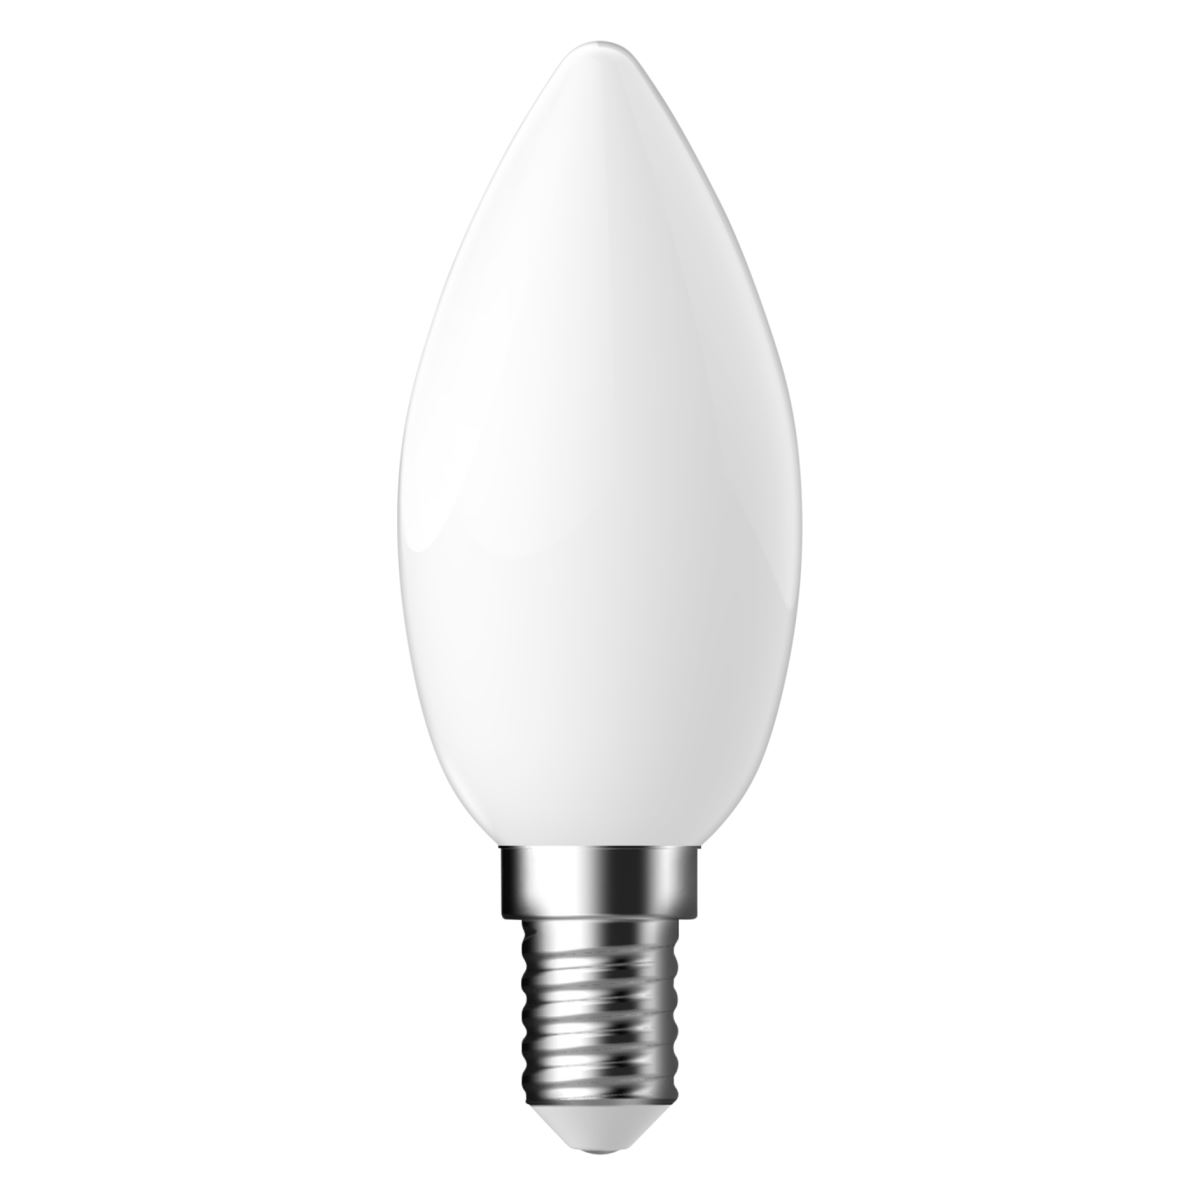 Nordlux Energetic LED Leuchtmittel E14 C35 Filament weiß 250lm 2700K 2,5W 80Ra 360° 3,5x3,5x9,7cm von Energetic